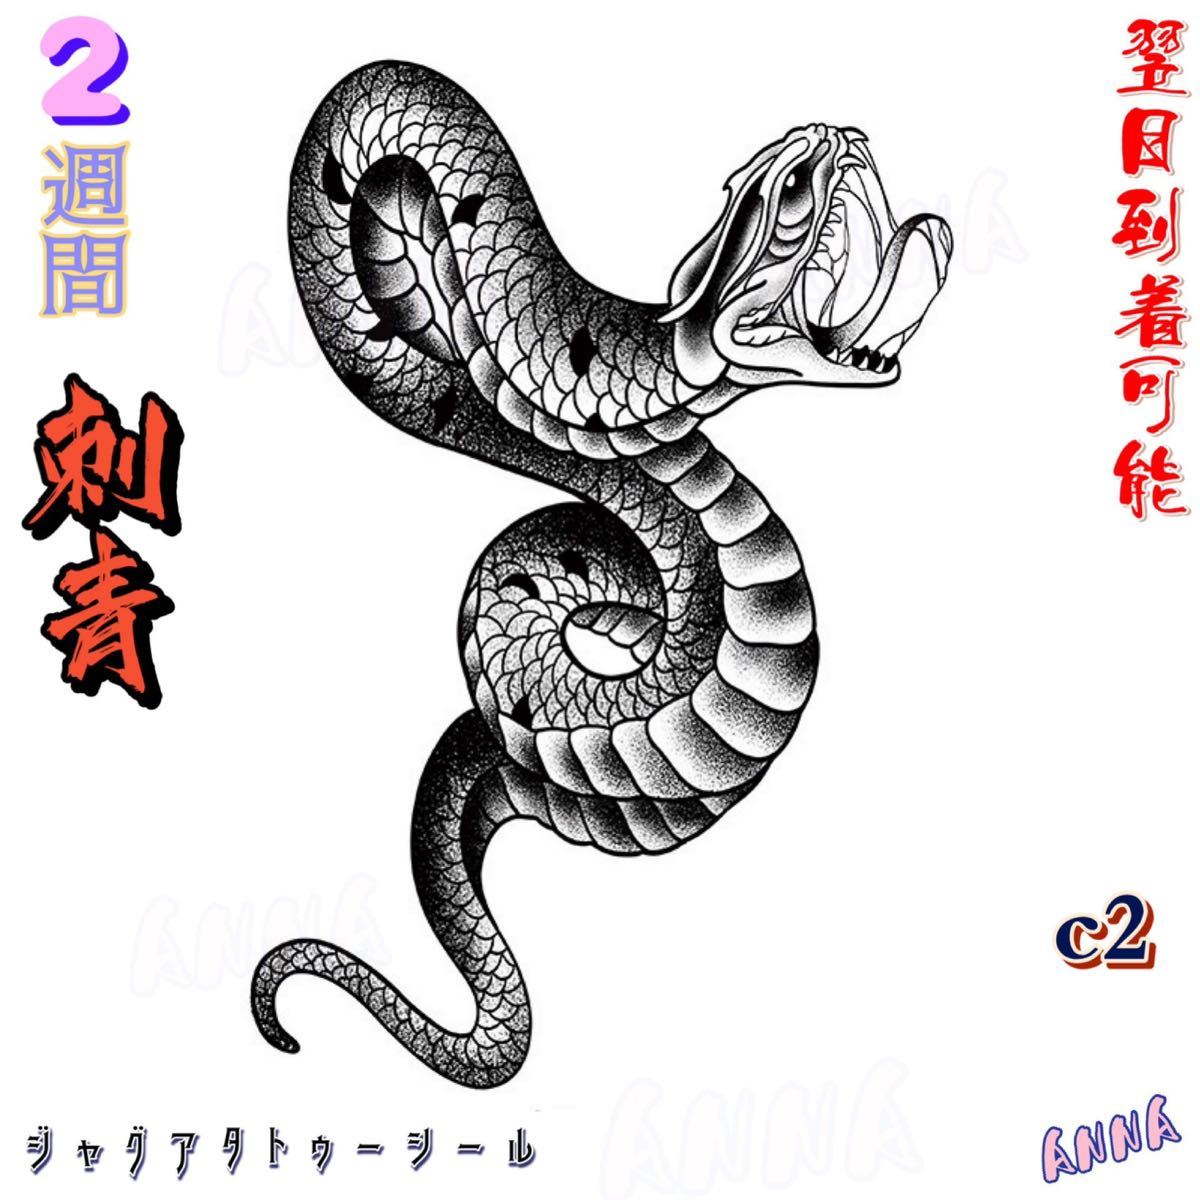 c2 蛇 2週間で消える ヘナタトゥー ジャグアタトゥーシール タトゥーシール ティントタトゥーシール ボディーアートシールの画像1